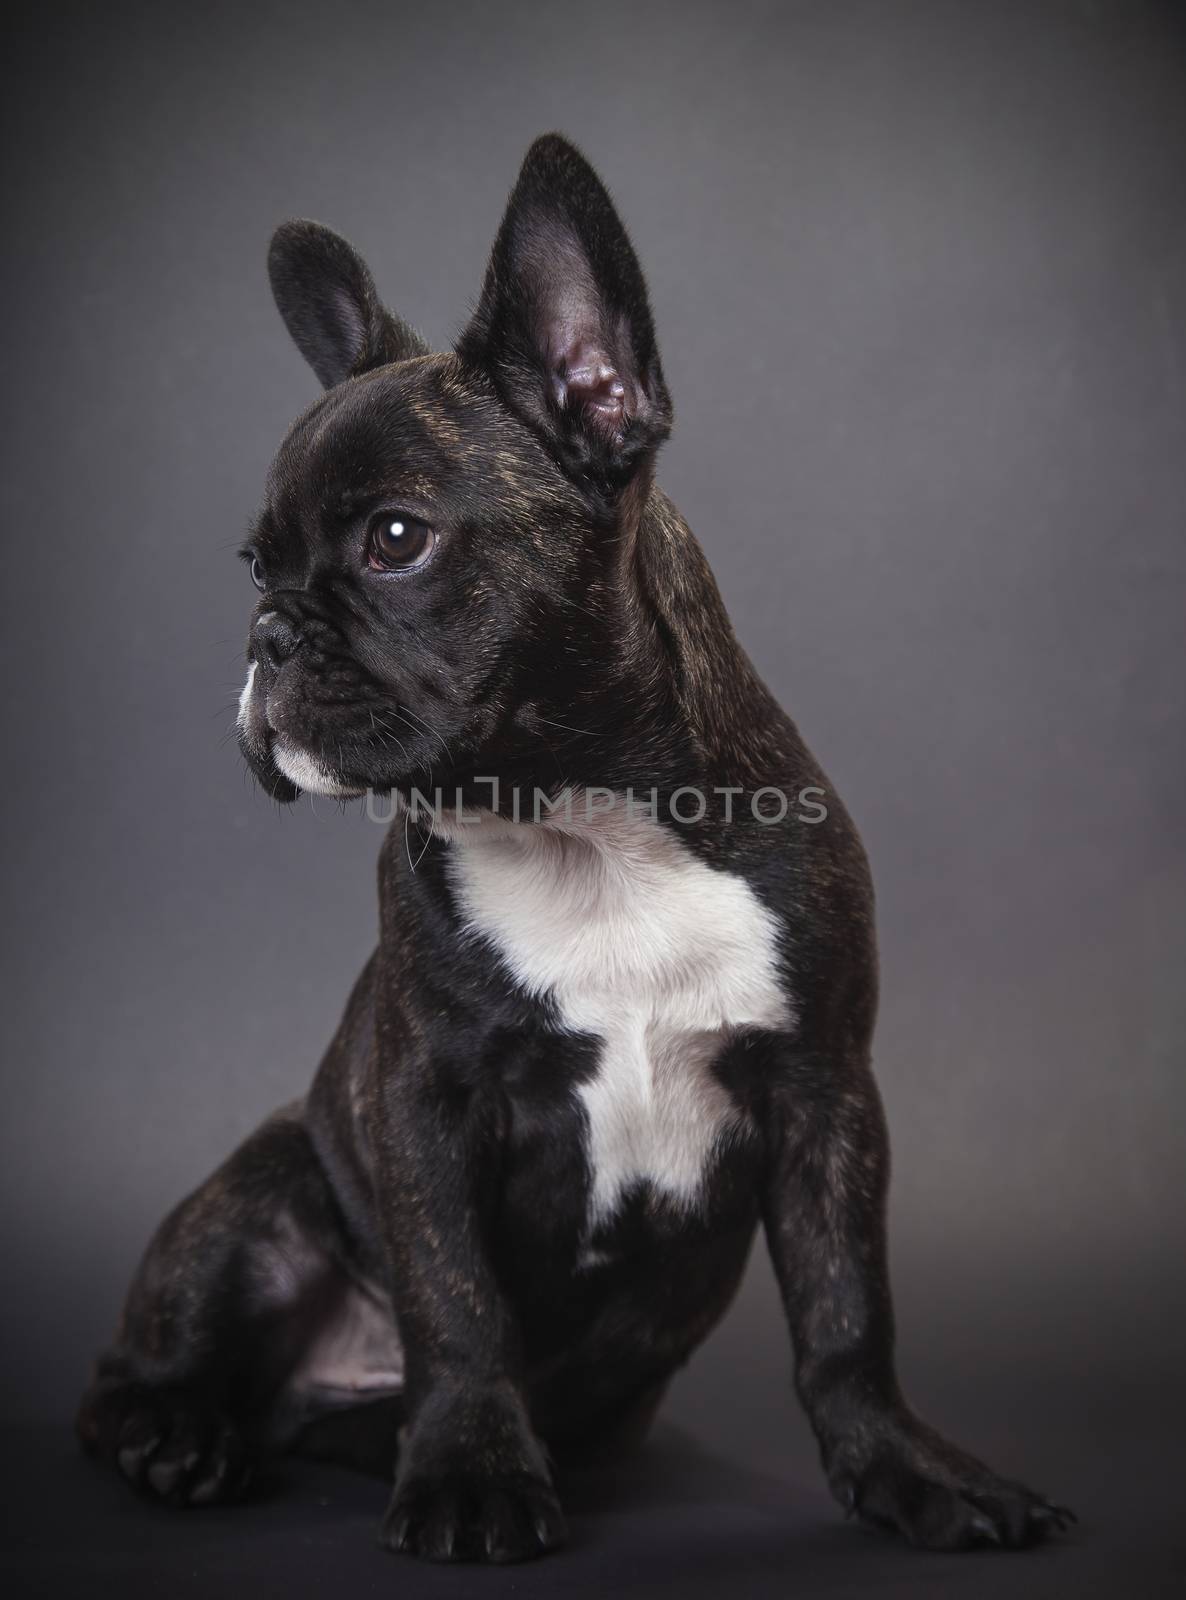  puppy french bulldog on a dark background